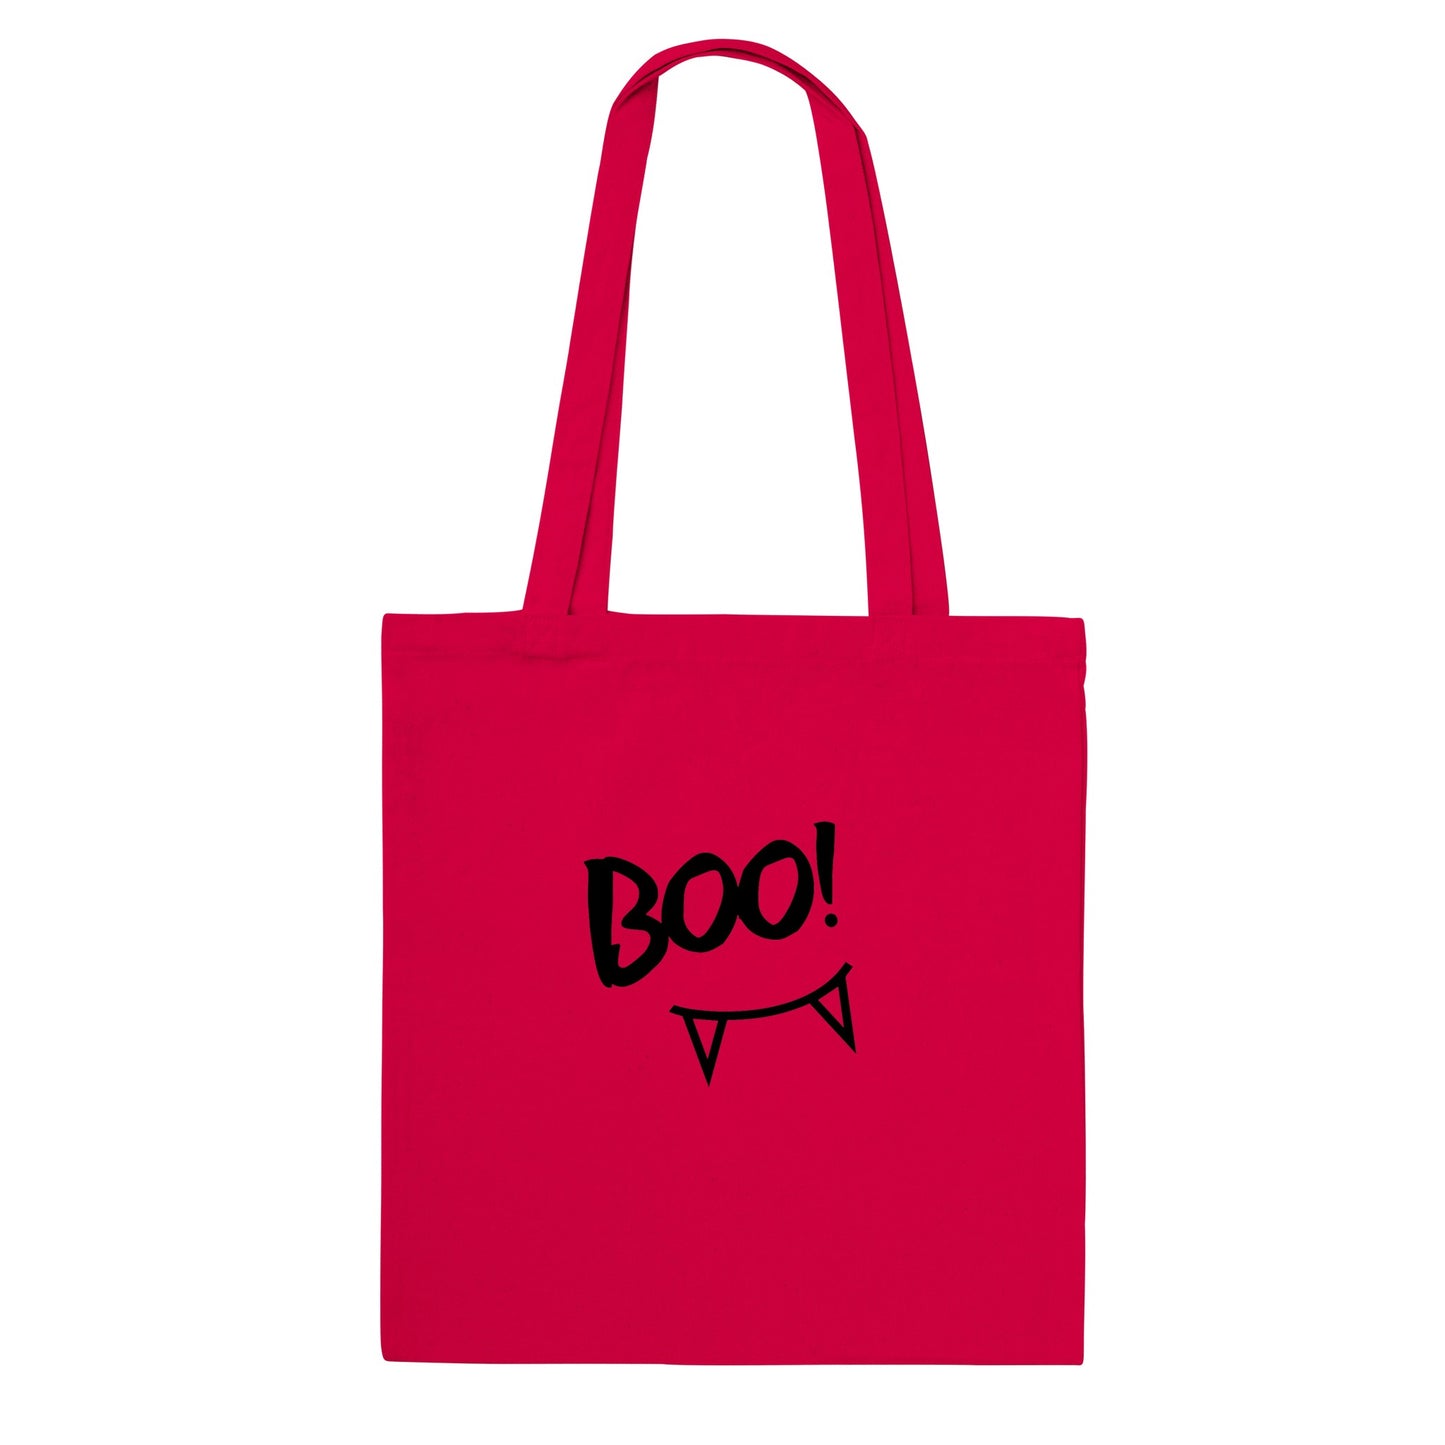 Boo! - Classic Tote Bag